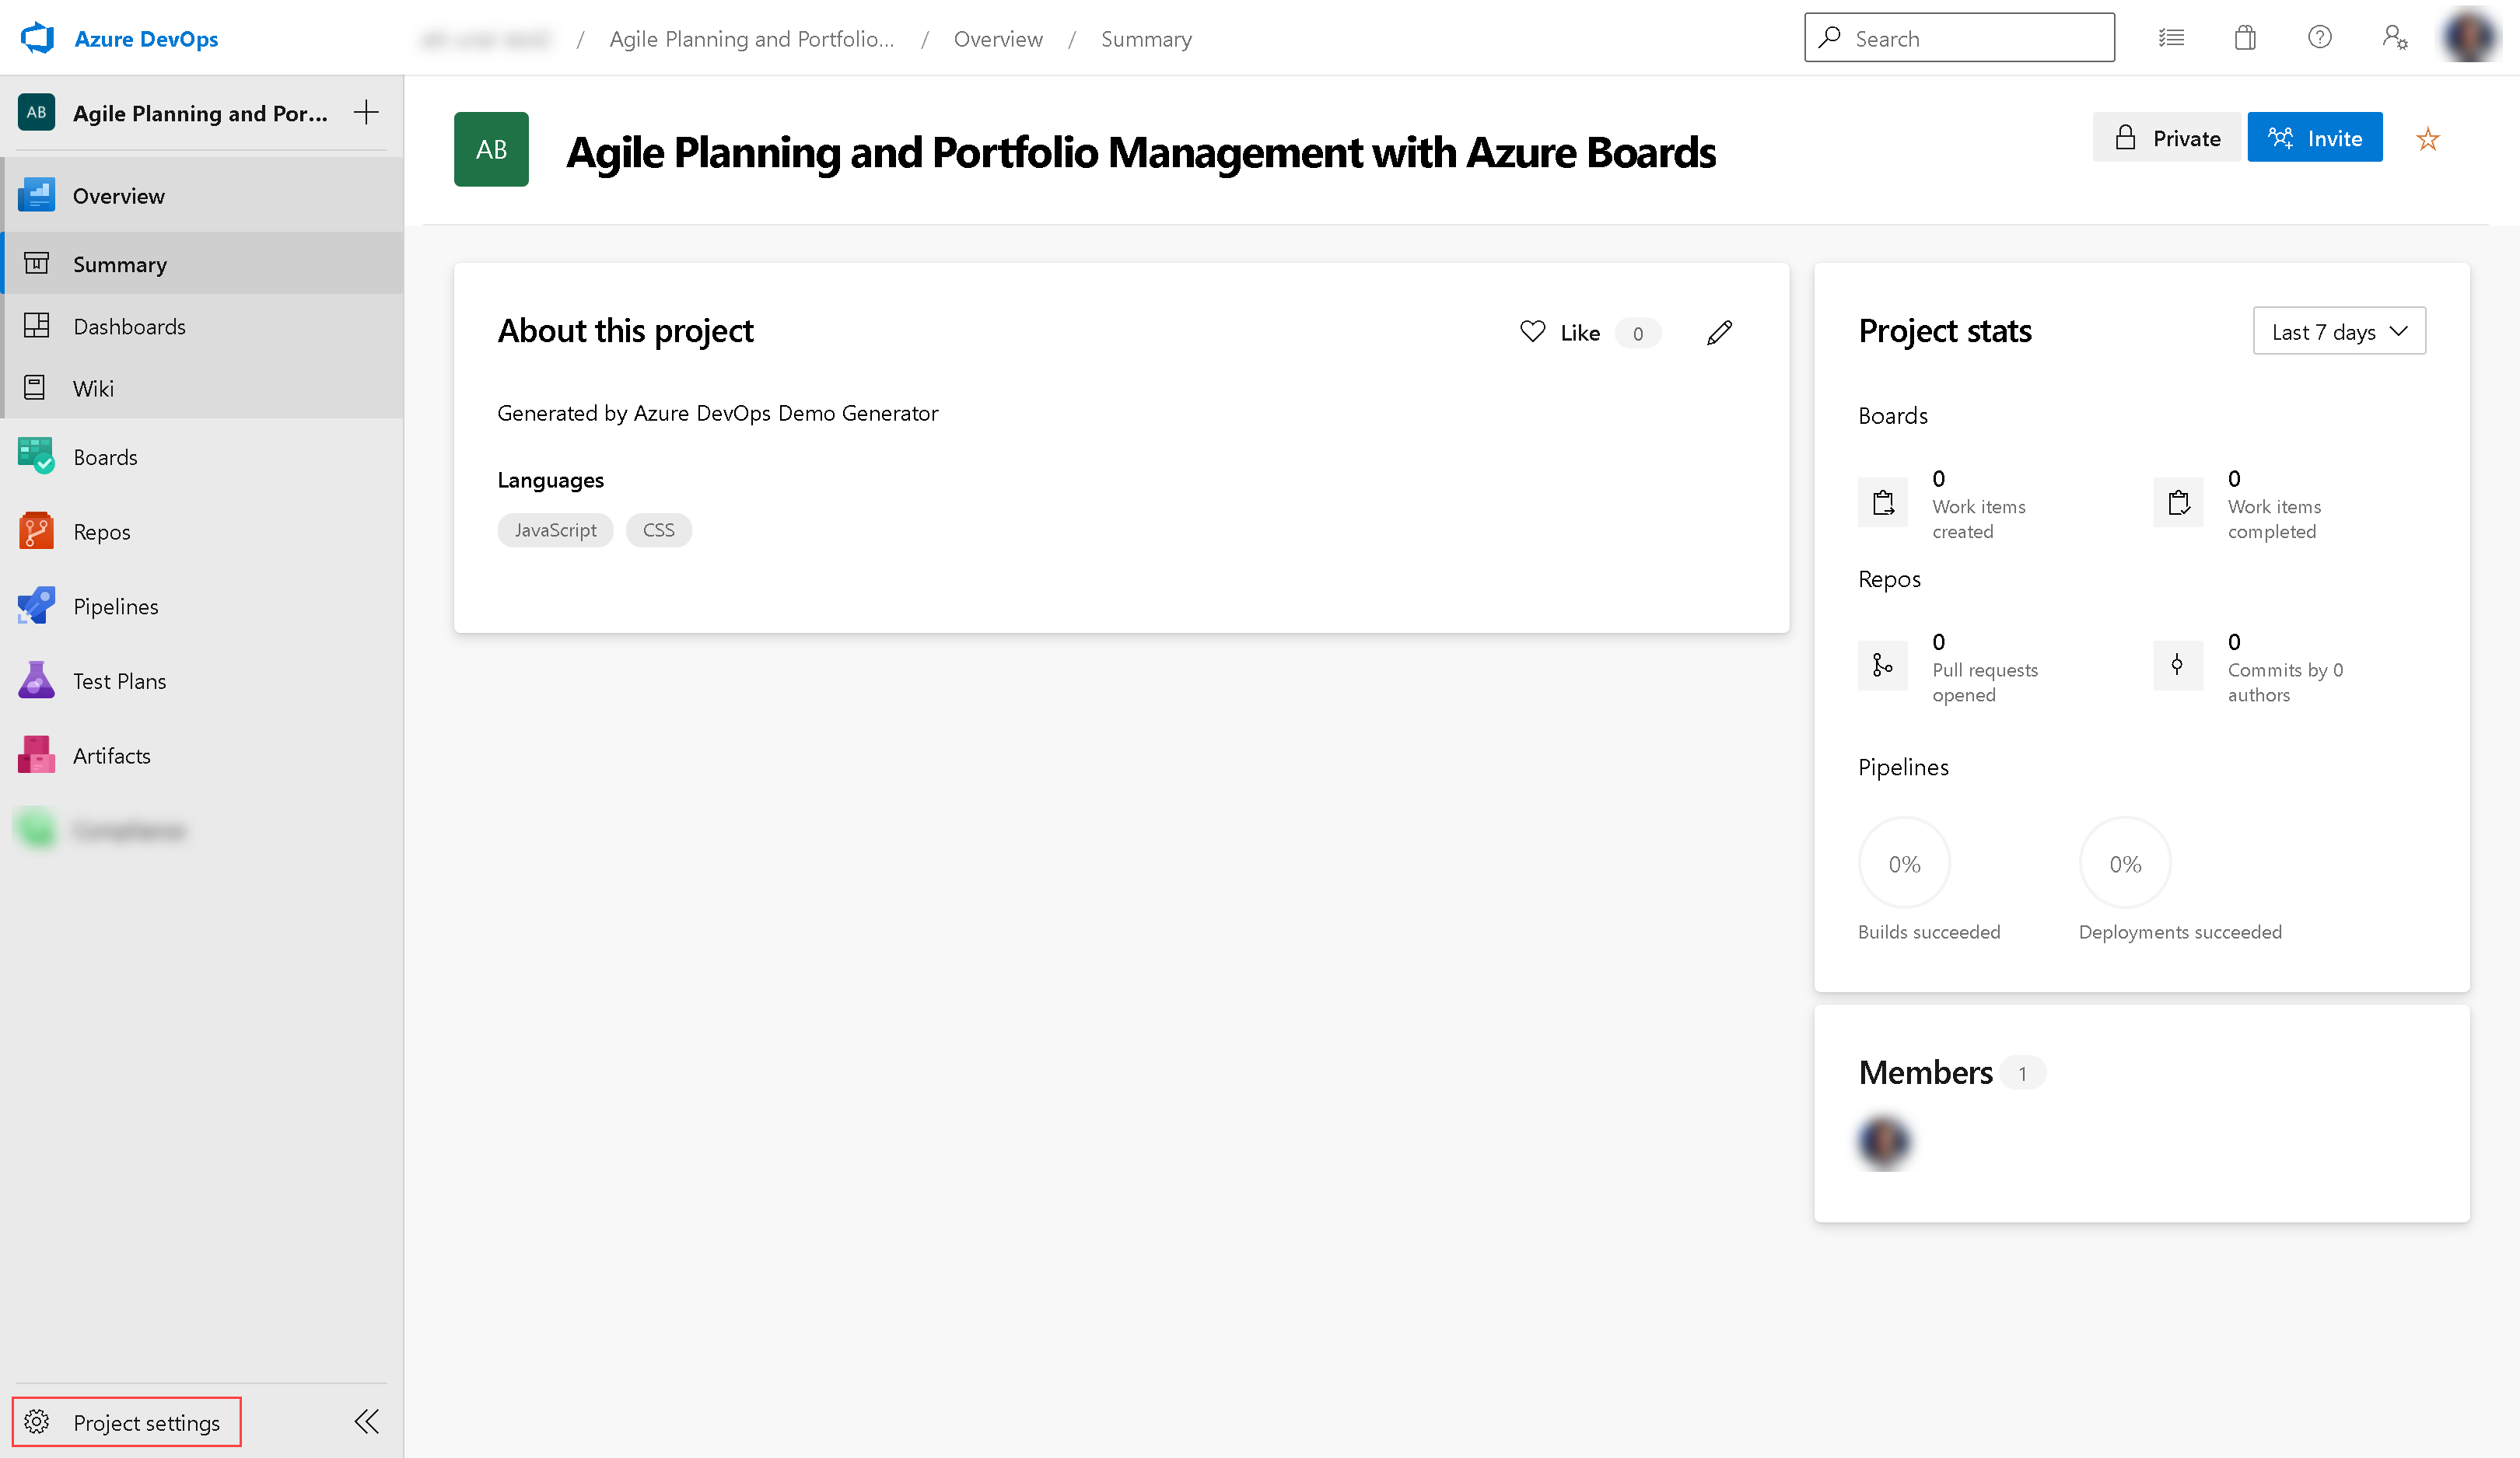 Azure DevOps project window. Click on "Project settings"
option